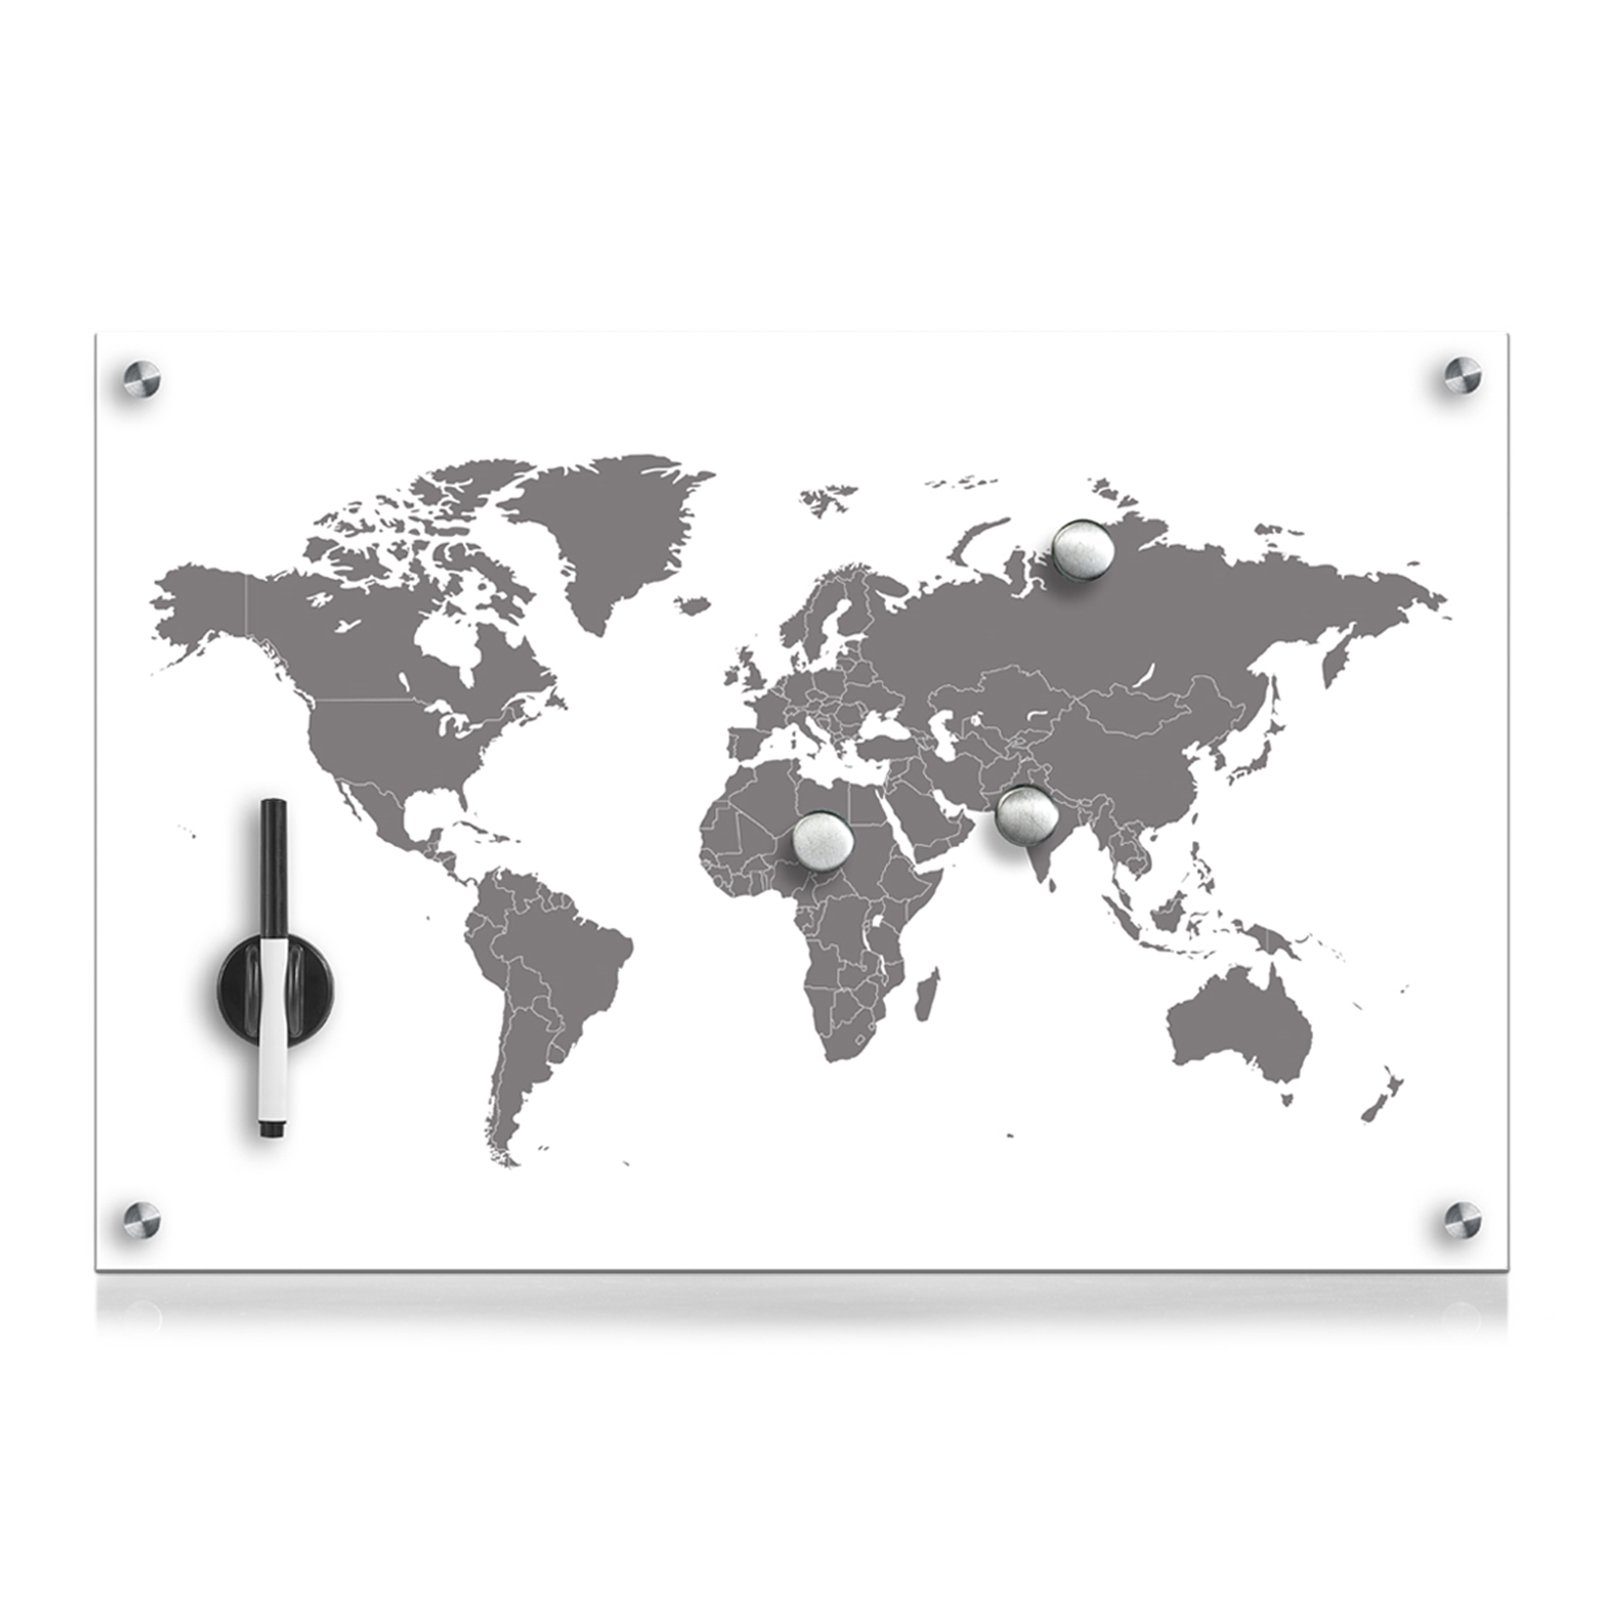 HTI-Living Memoboard Memoboard Worldmap, rechteckig Schreibtafel Schreibboard Magnettafel Magnetboard Glas